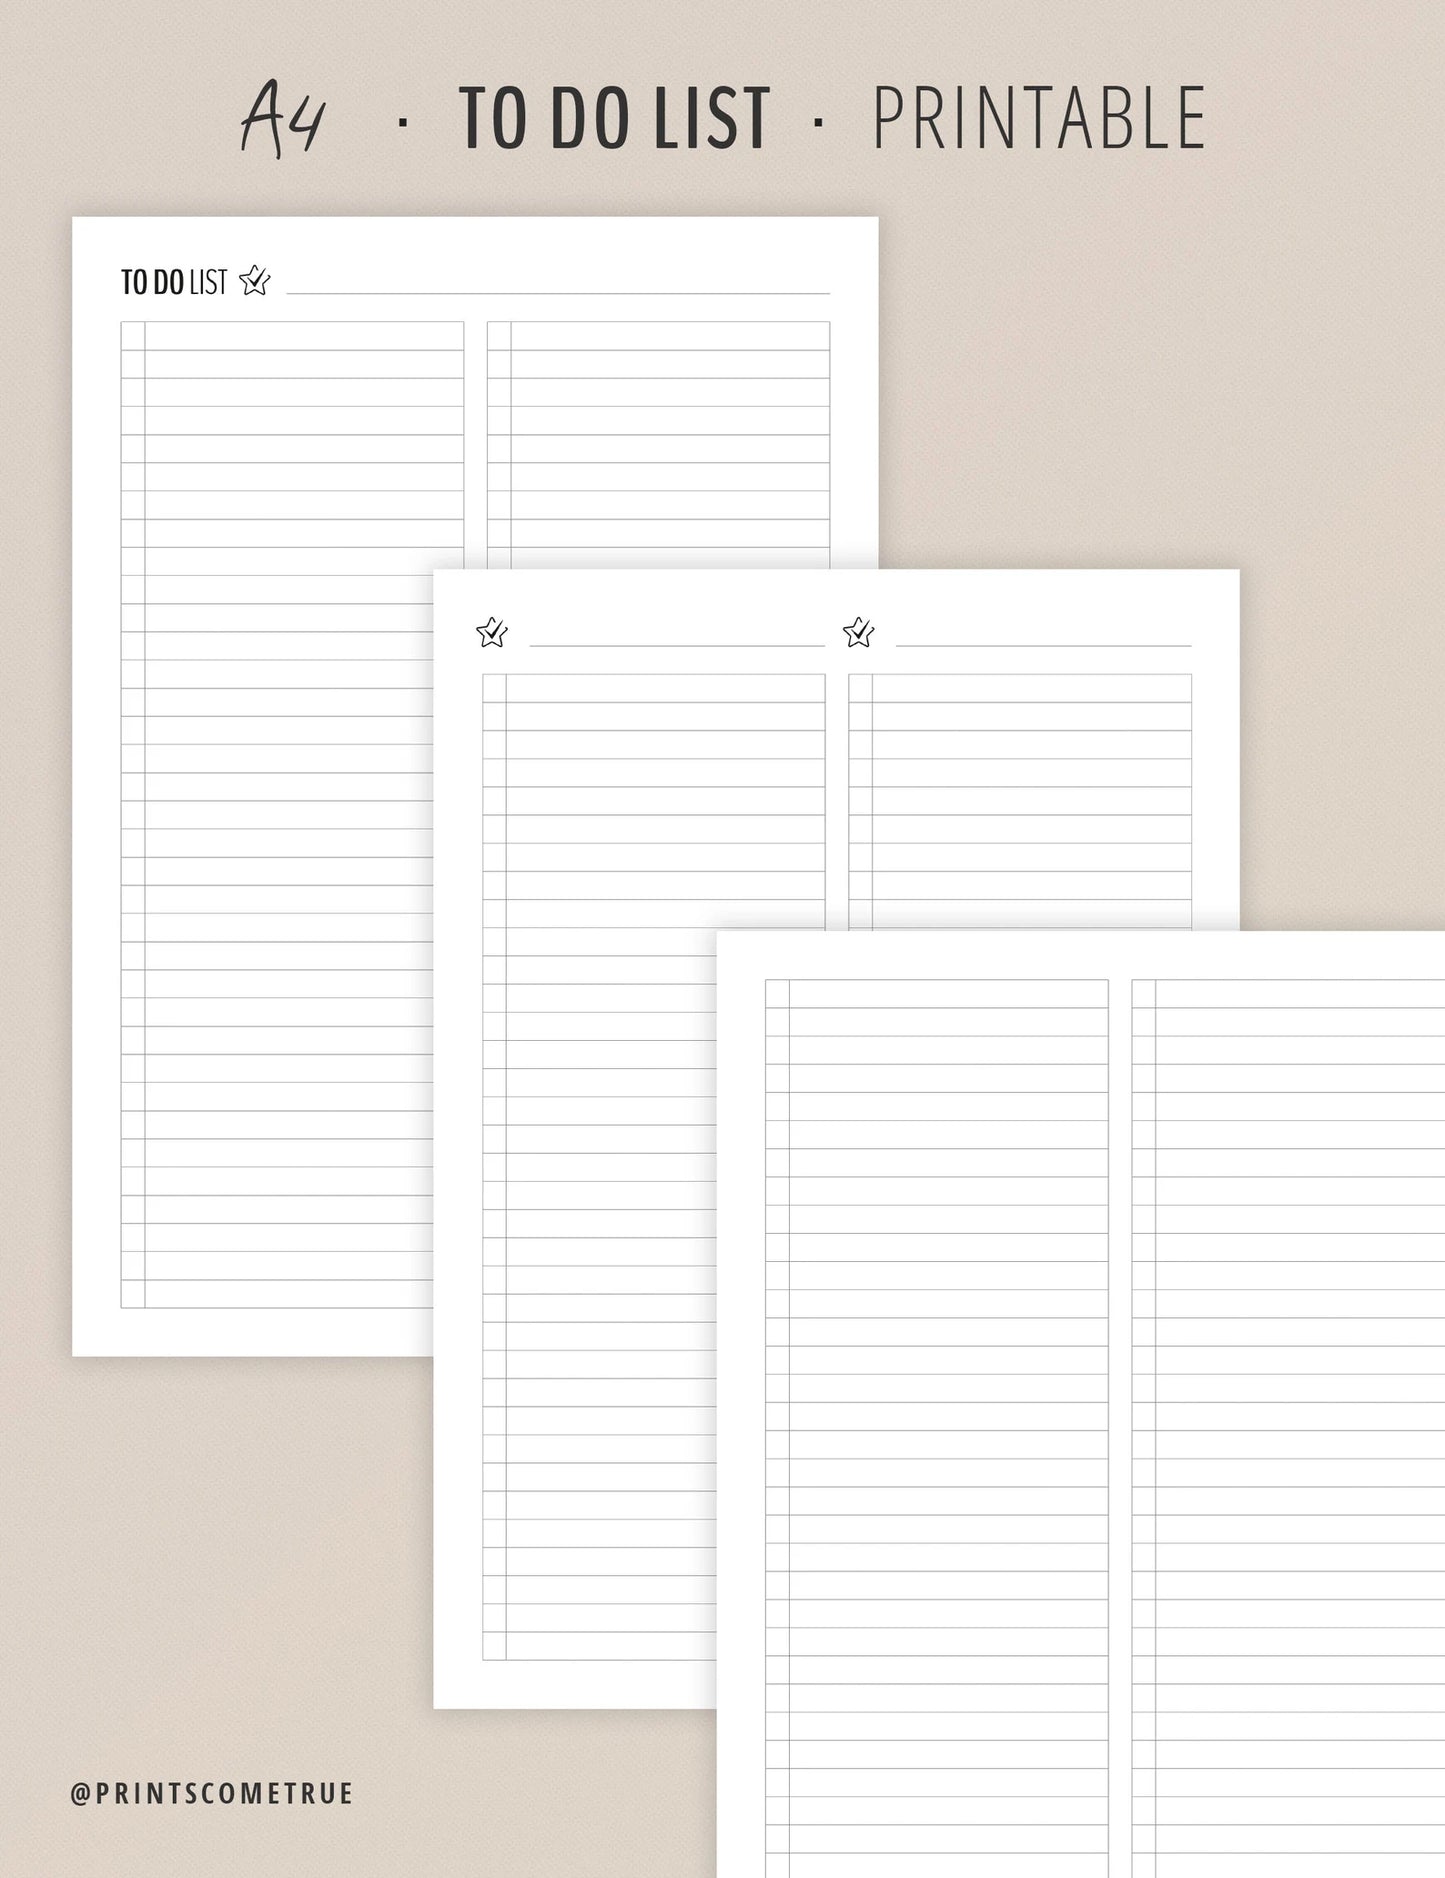 To Do List - Printable Planner A4 - 1